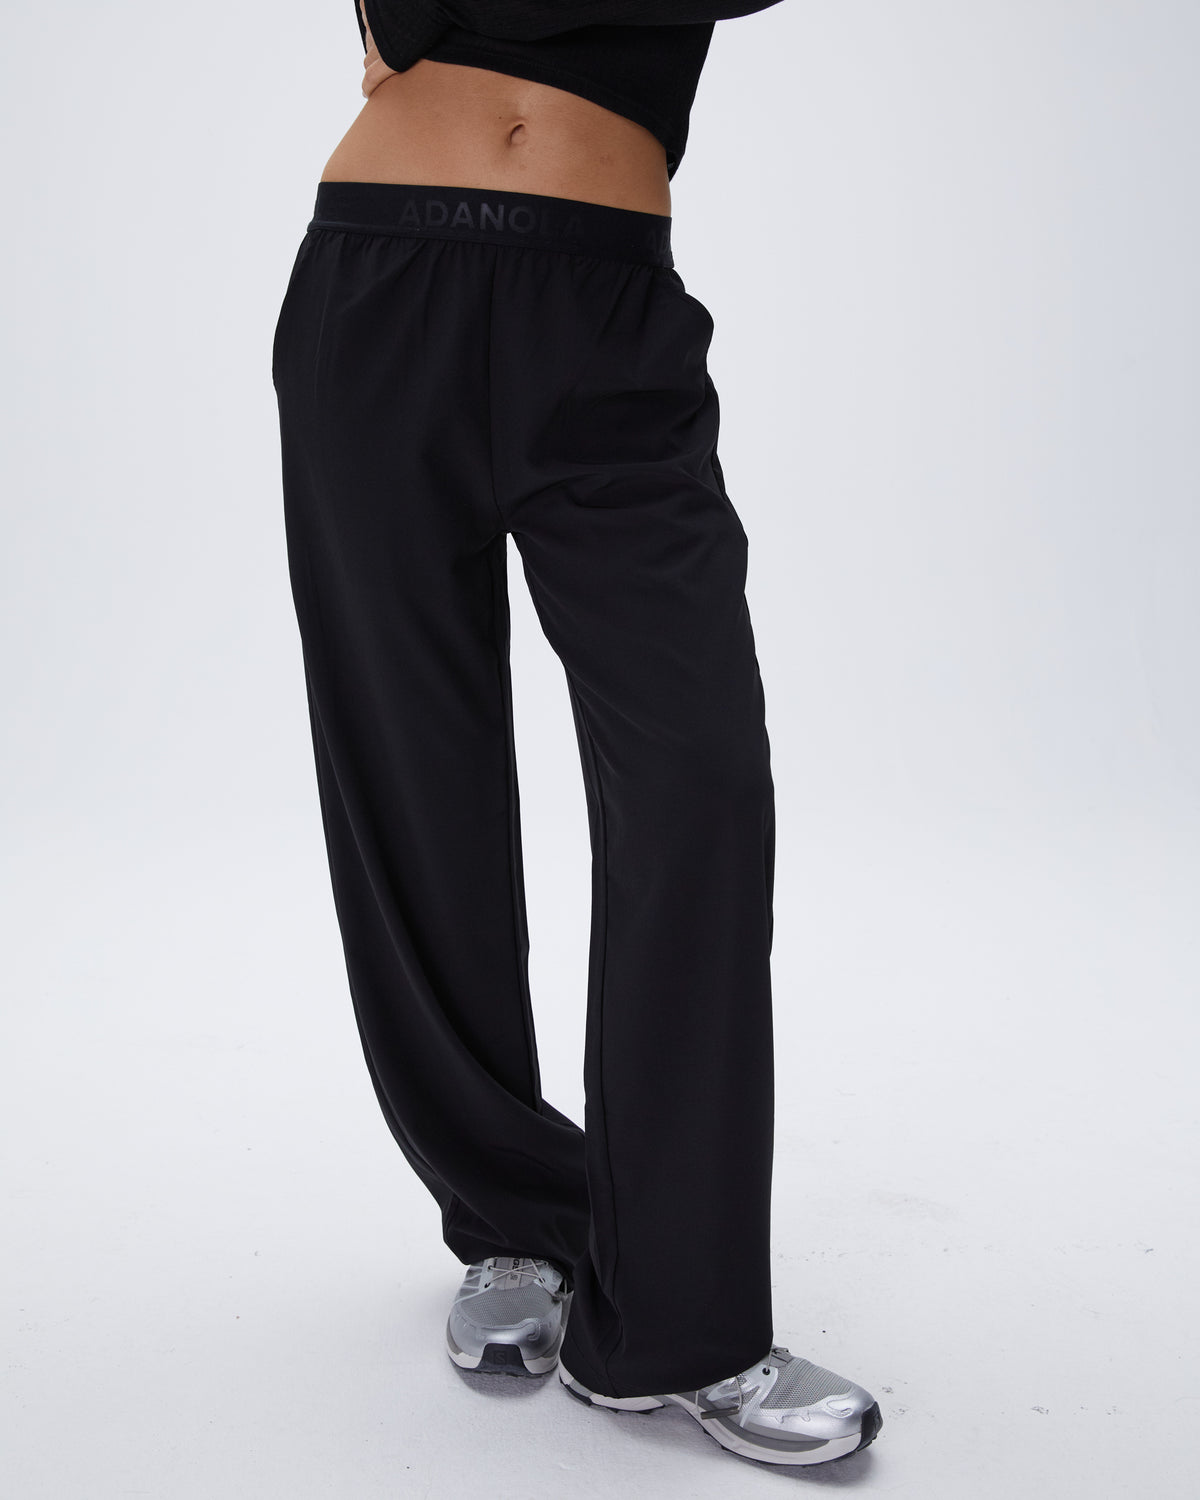 Women's Adanola Branded Waistband Black Pants